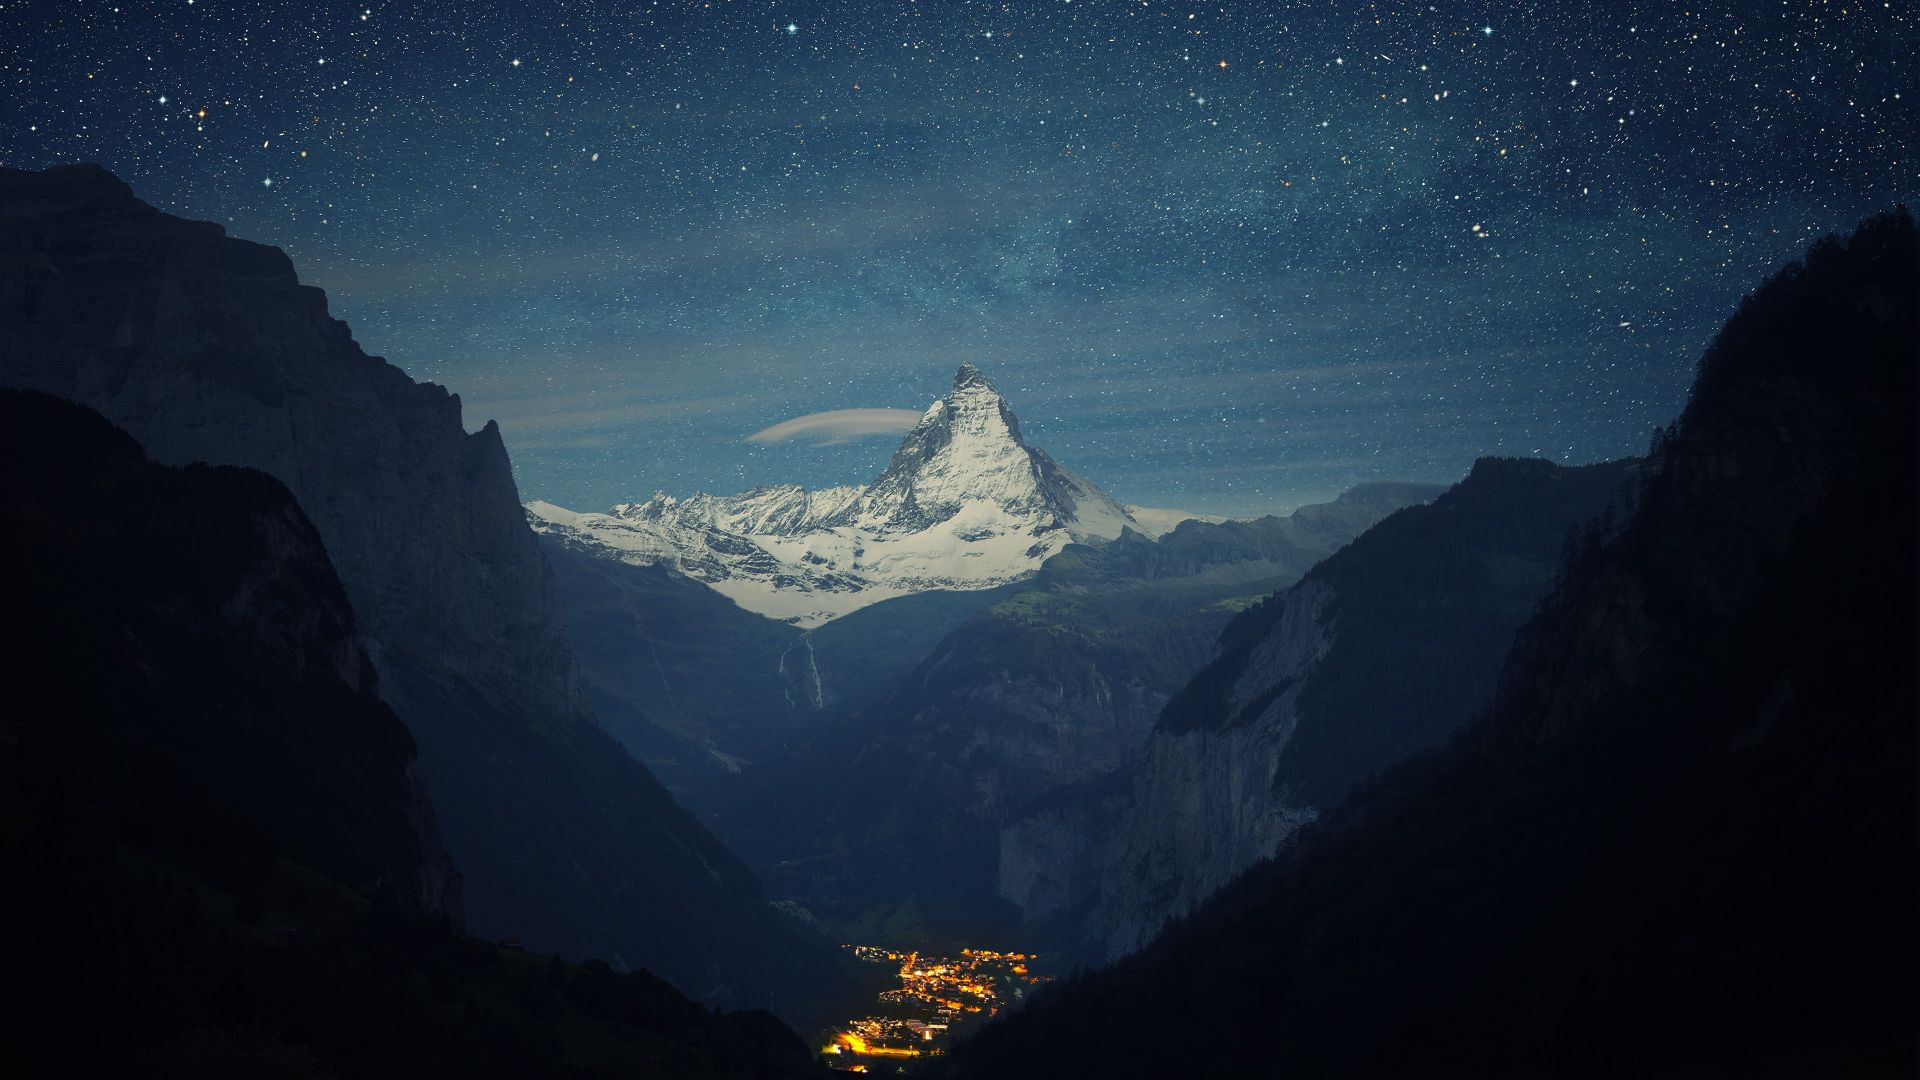 Zermatt-Matterhorn, Switzerland, Europe, 4K (horizontal)